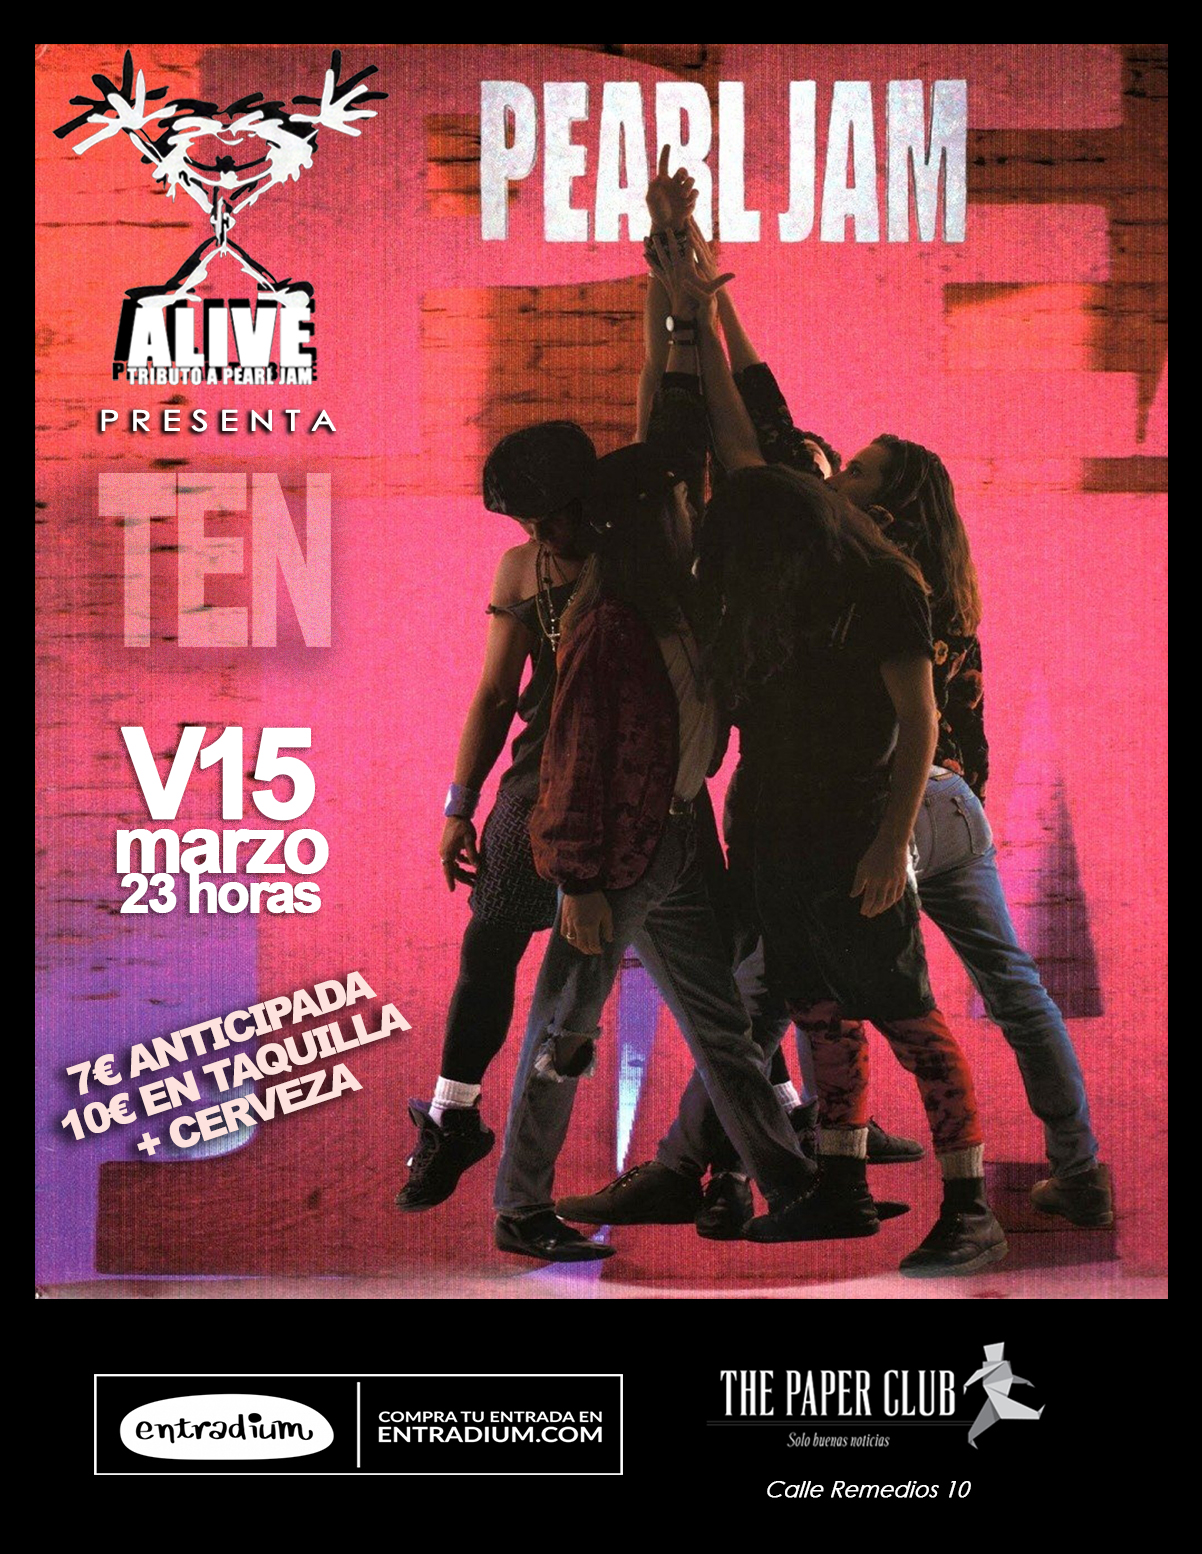 Alive (Tributo a Pearl Jam) presenta ‘TEN’